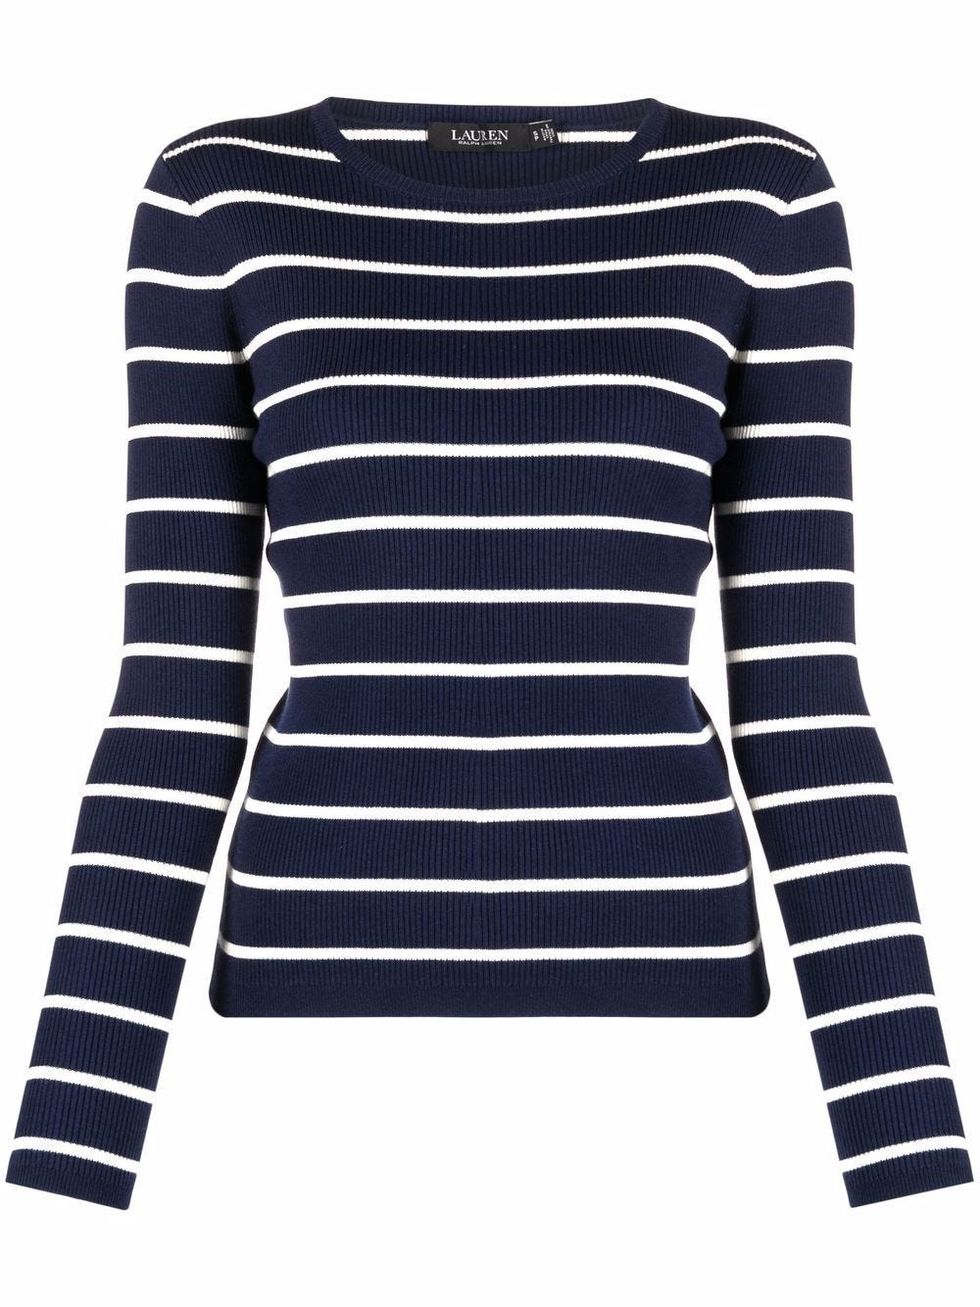 13 Stylish Breton Stripe Tops - Classic Striped Shirts to Buy Now